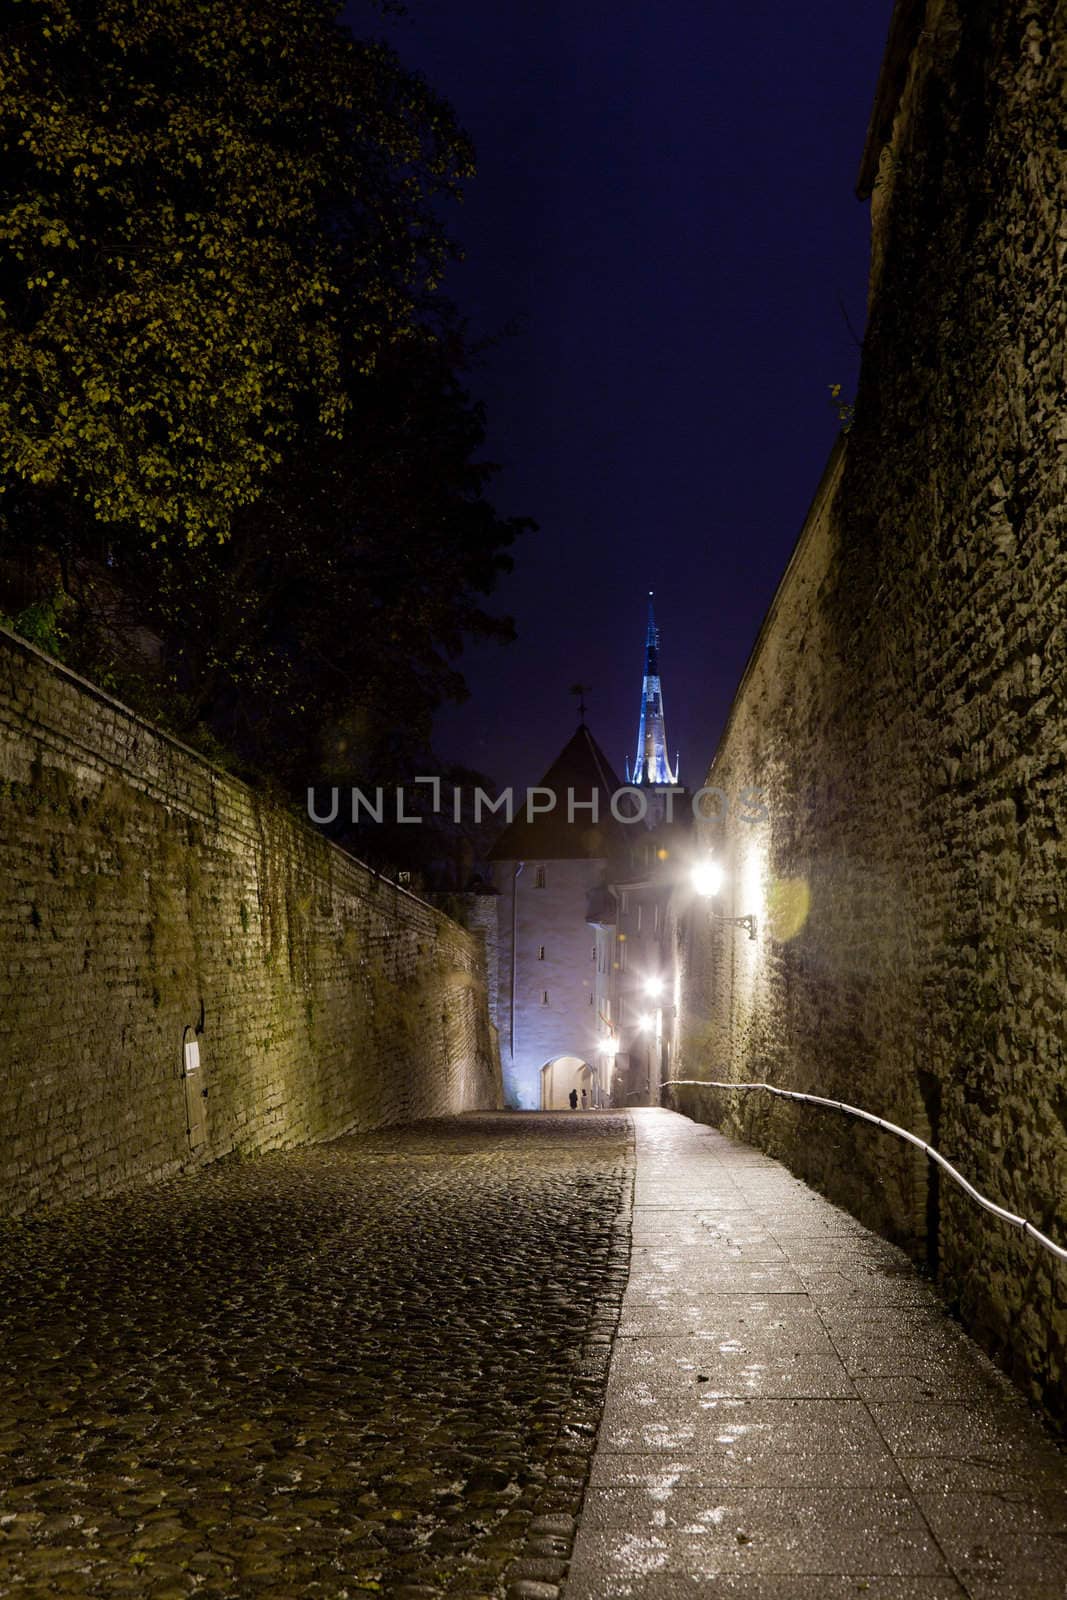 Luhike street leads to the old town of Toompea in Tallinn Estonia on a wet dark night